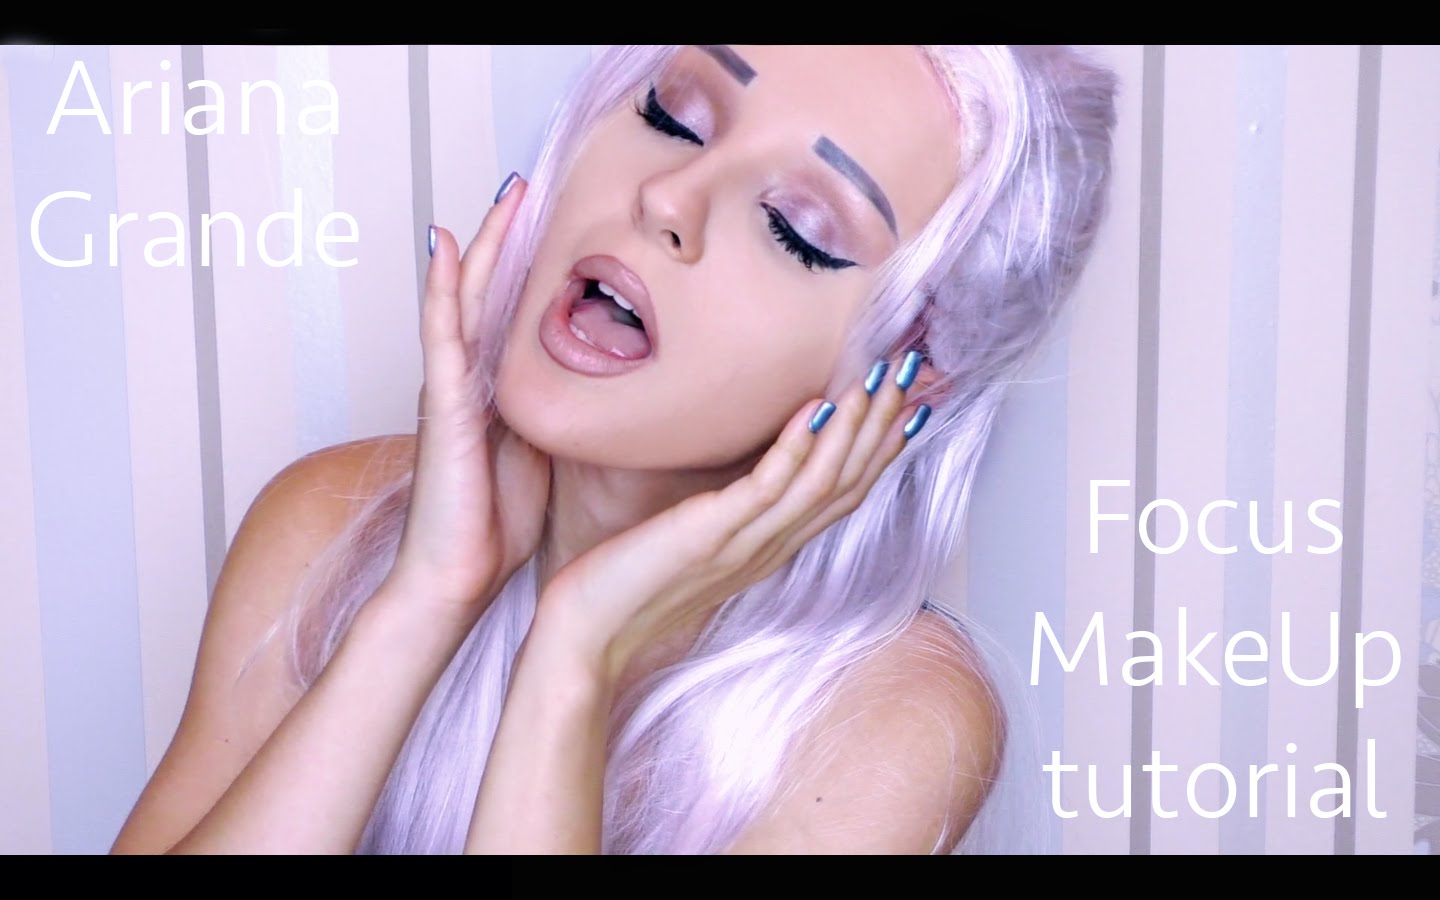 Focus Ariana Grande Makeup HEAD